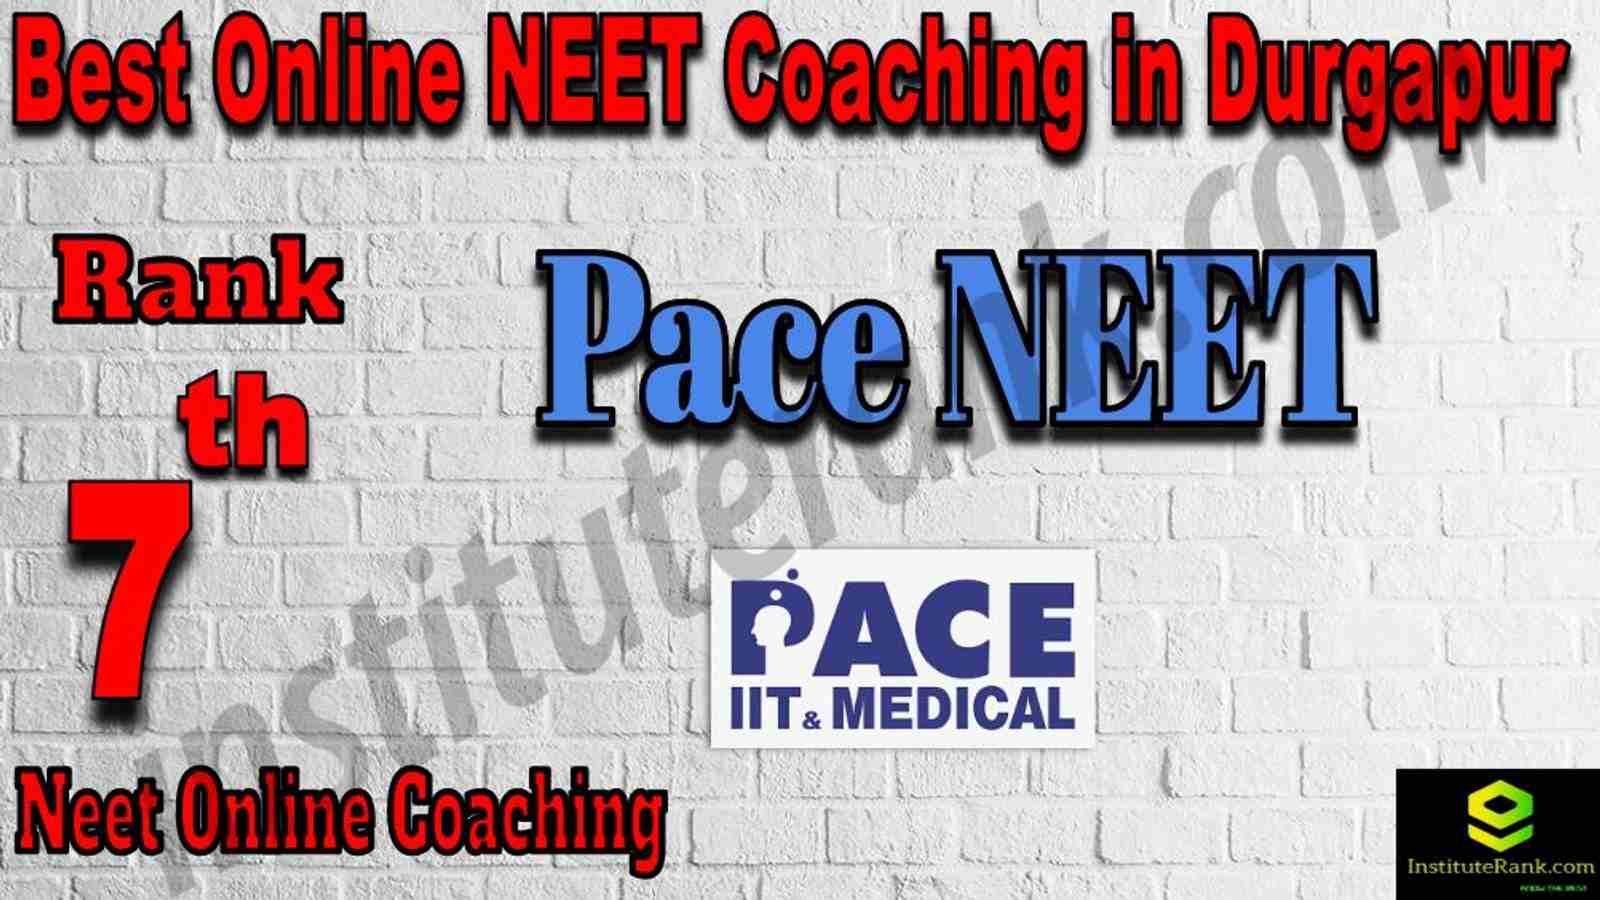 7th Best Online Neet Coaching in Durgapur